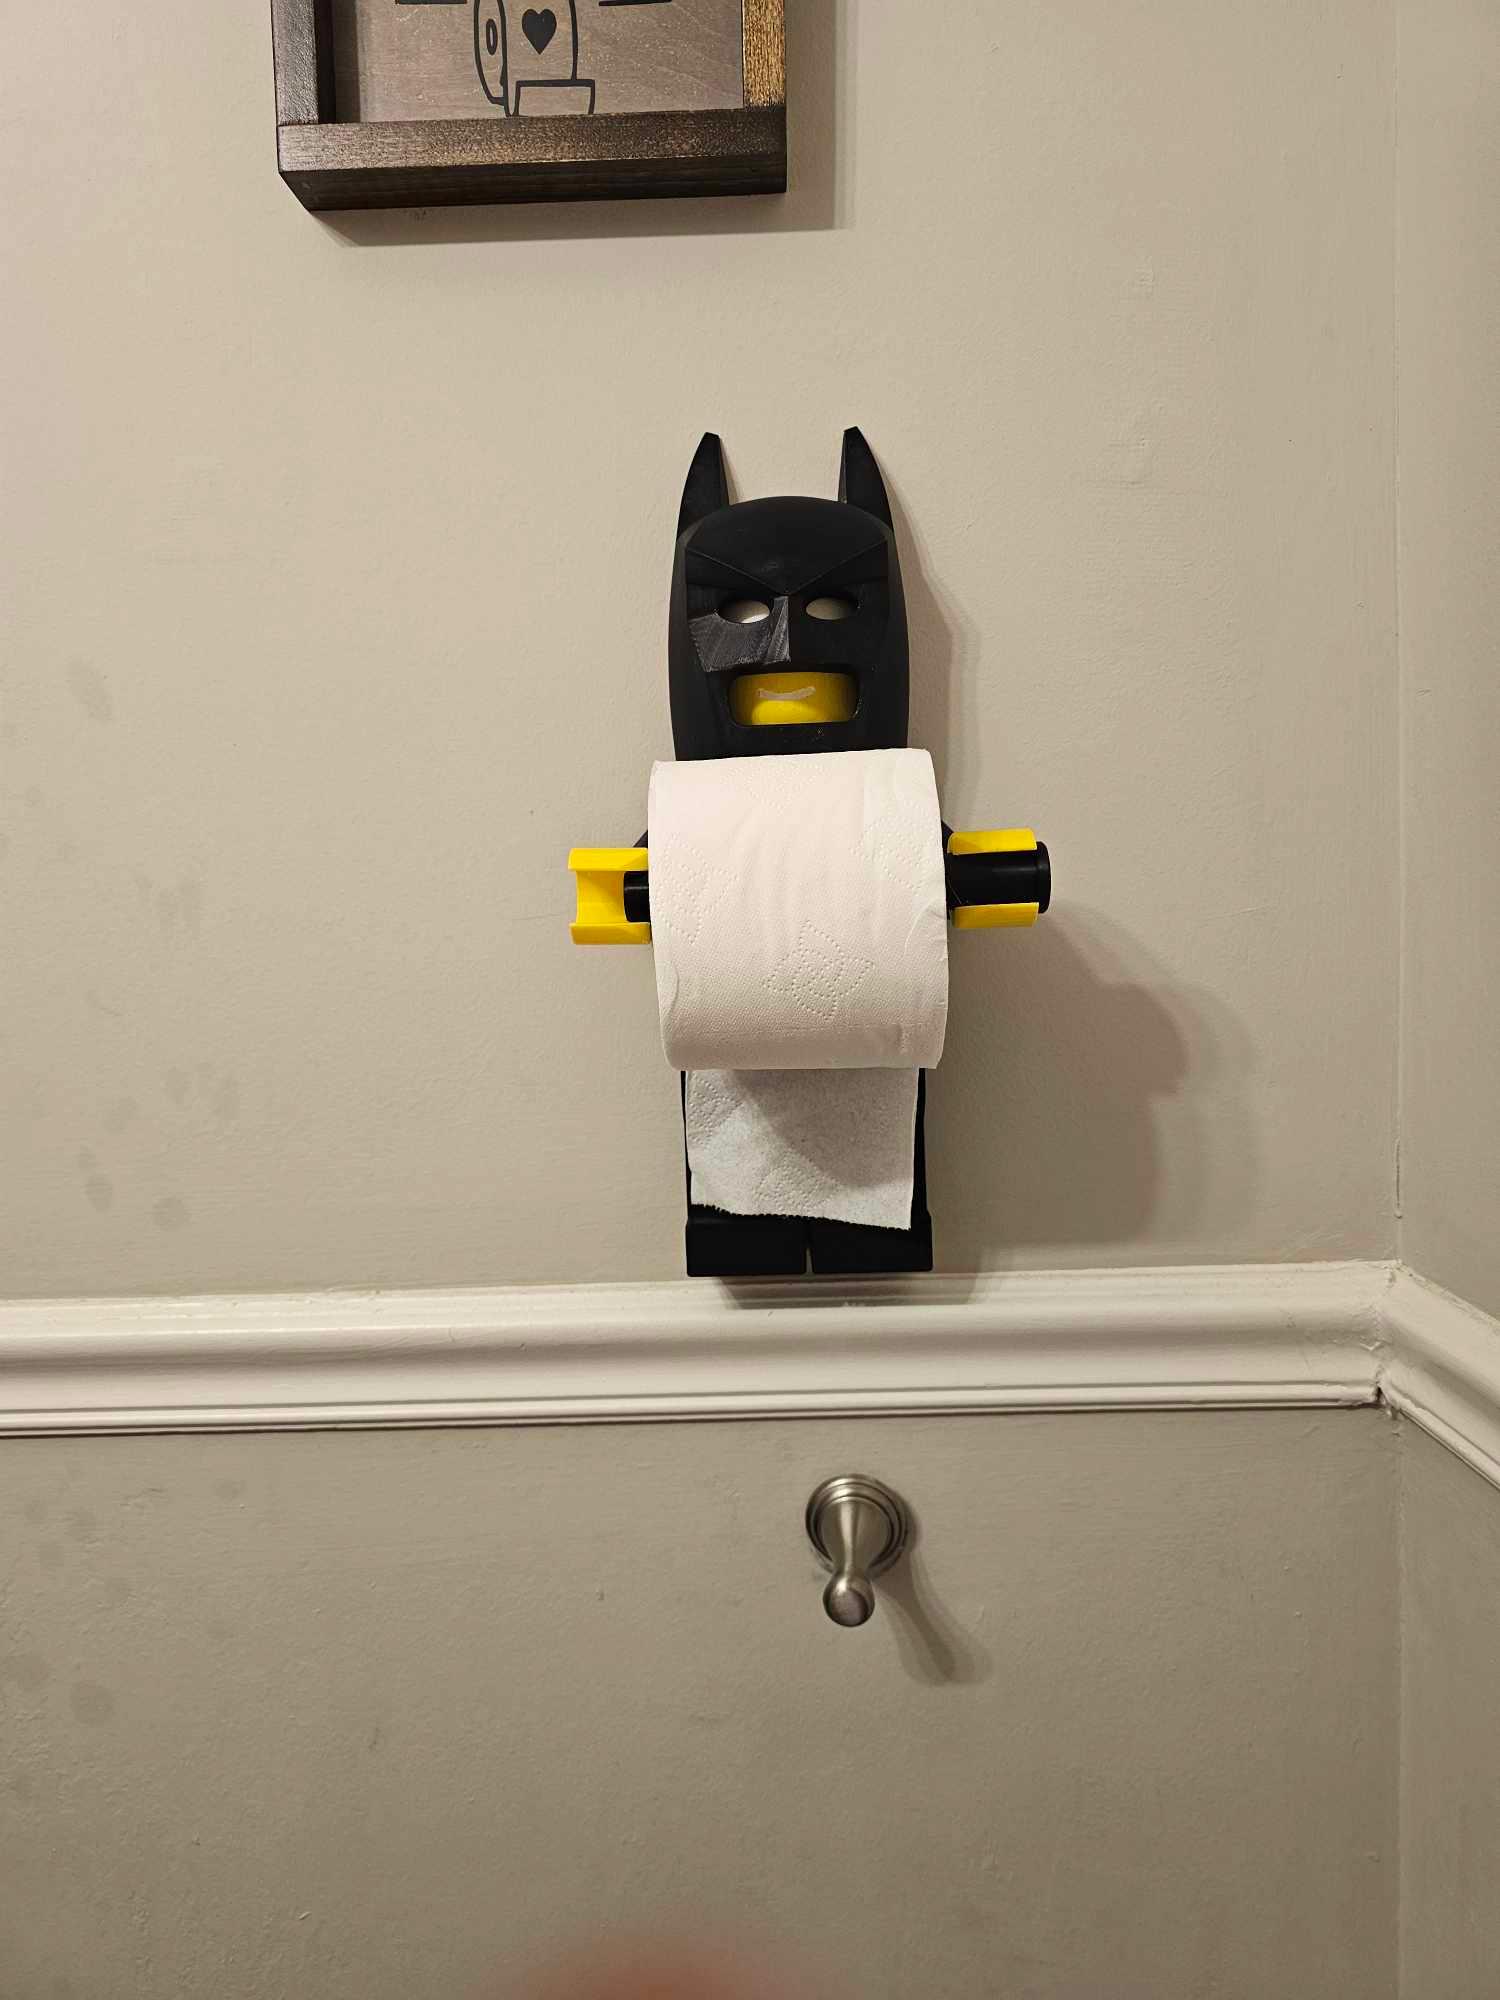 Batman minifig toilet paper holder 3d model